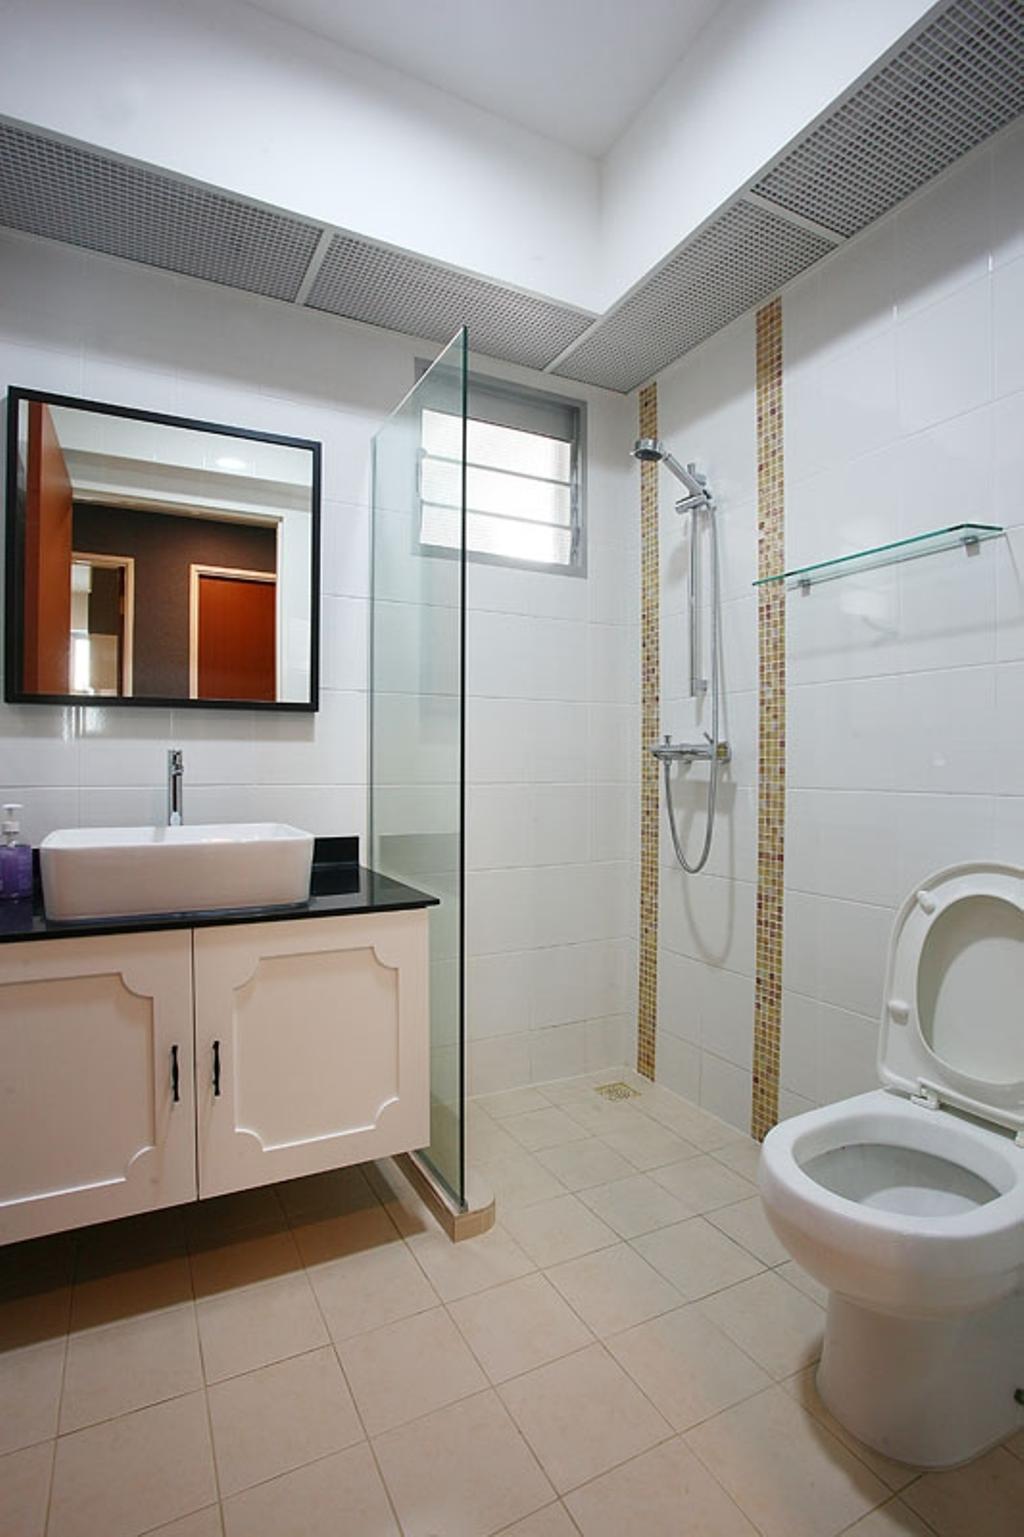 Transitional, HDB, Bathroom, Buangkok Green, Interior Designer, Fineline Design, Bathroom Vanity, Sink, Bathroom Sink, Mirror, Shower Screen, Shower Area, Shower Head, Indoors, Interior Design, Room